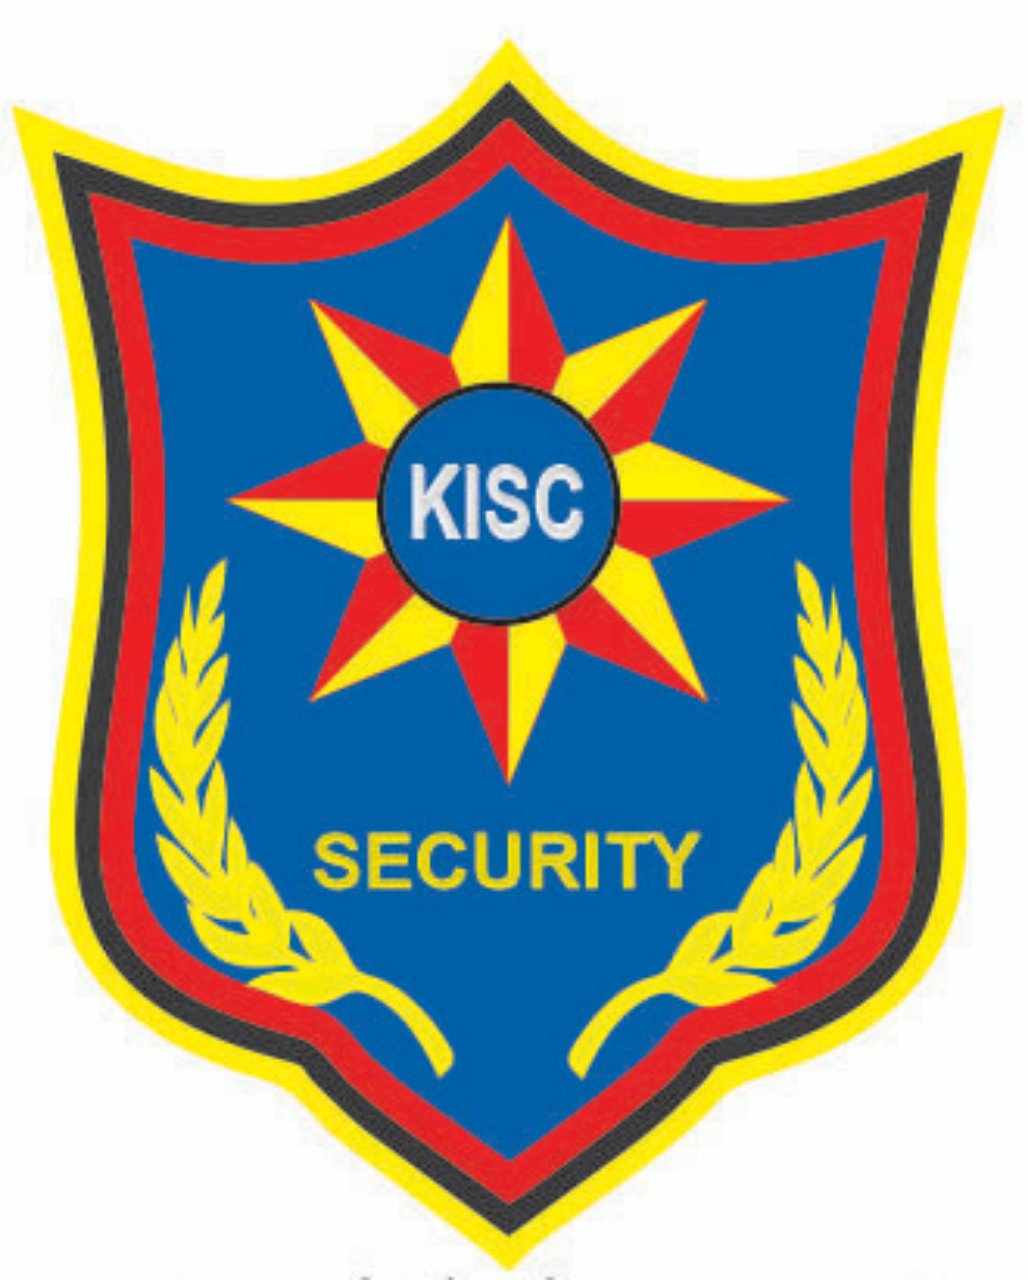 KISC Security